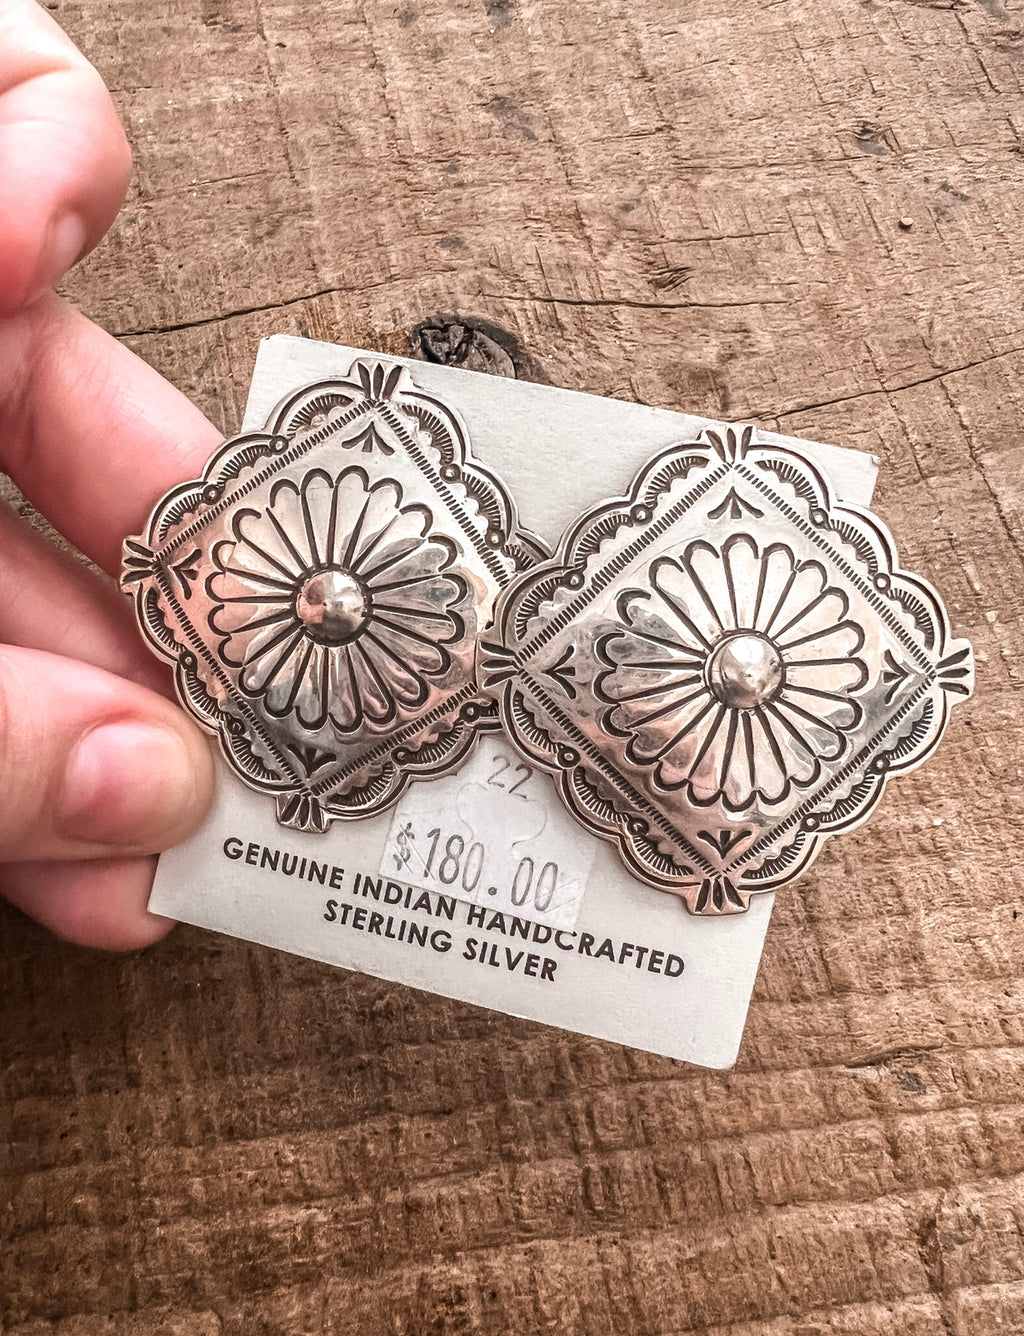 Genuine Sterling Silver Handcrafted Earrings